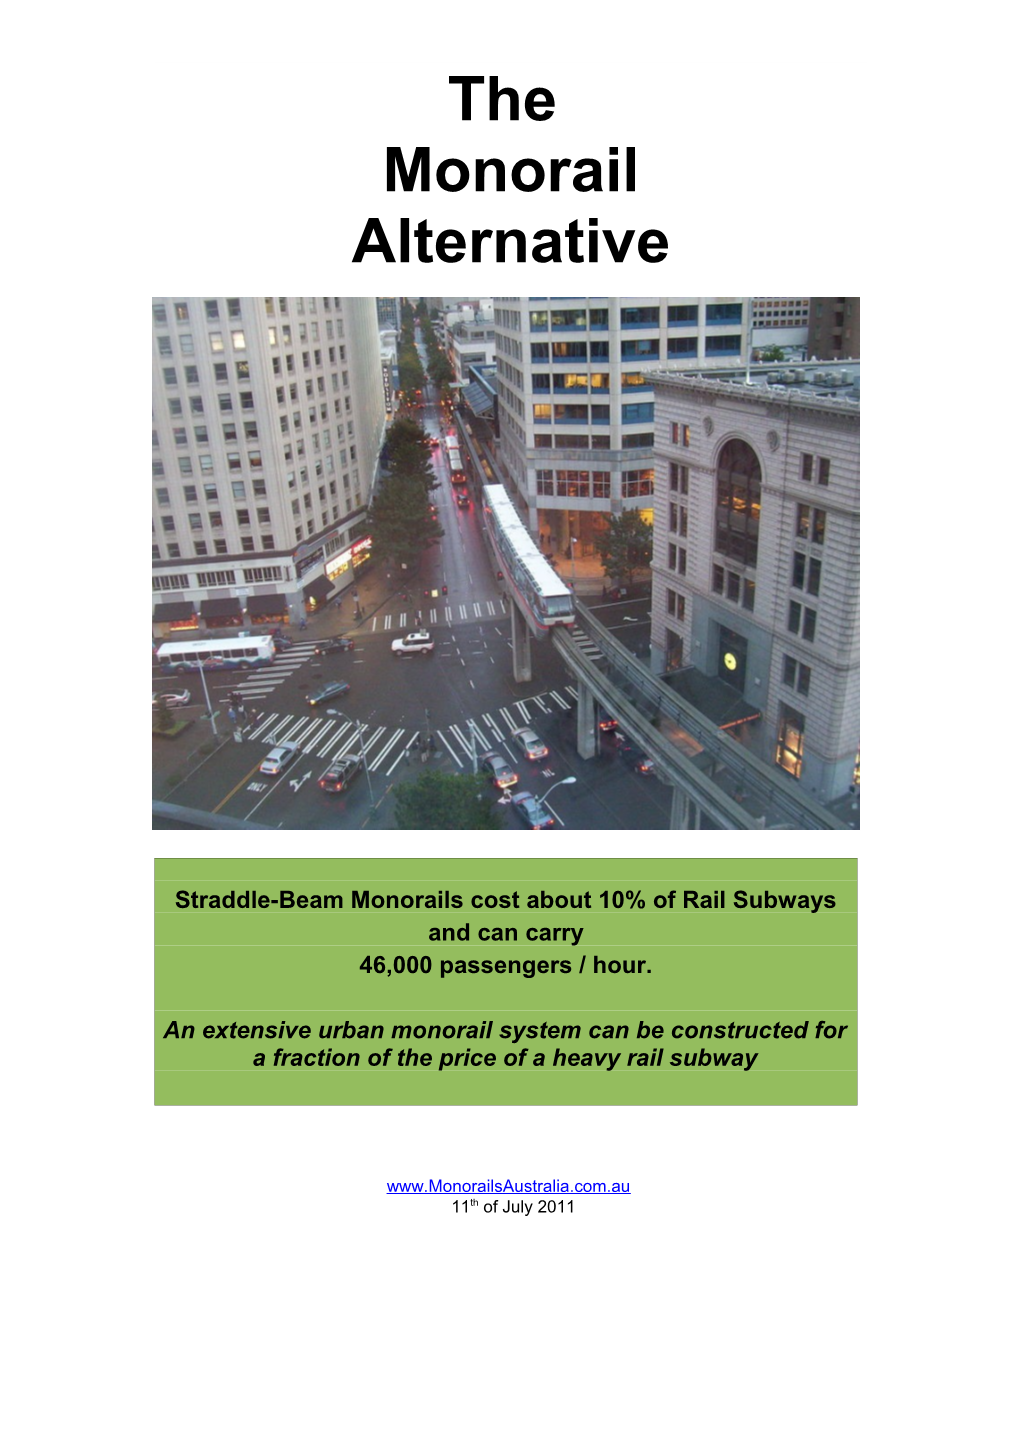 The Monorail Alternative